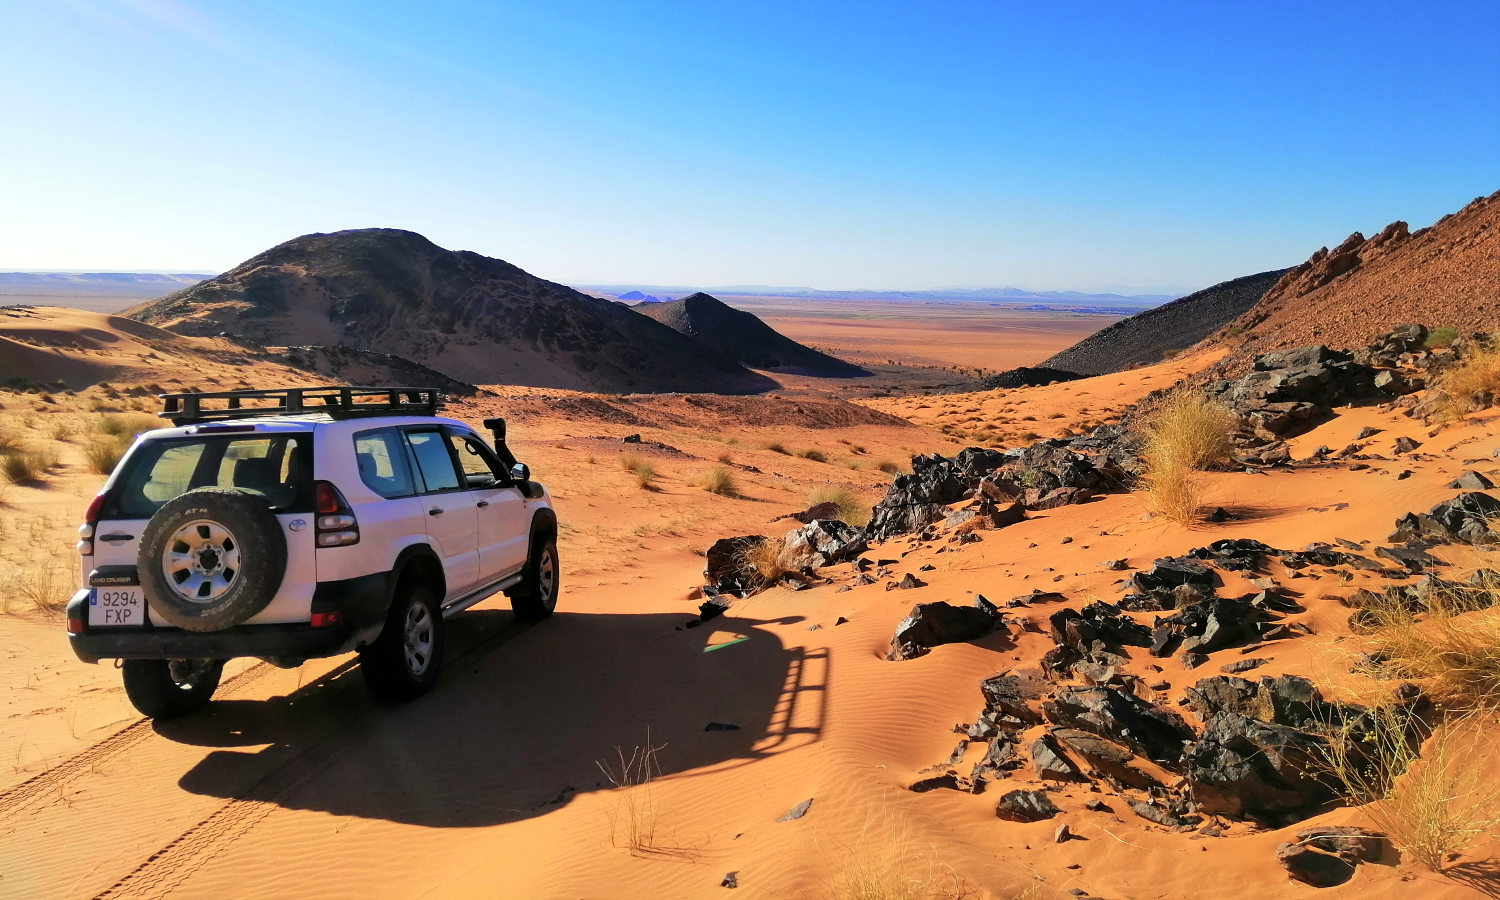 11 days Morocco 4x4 Jeep safari tour from Casablanca to explore Morocco